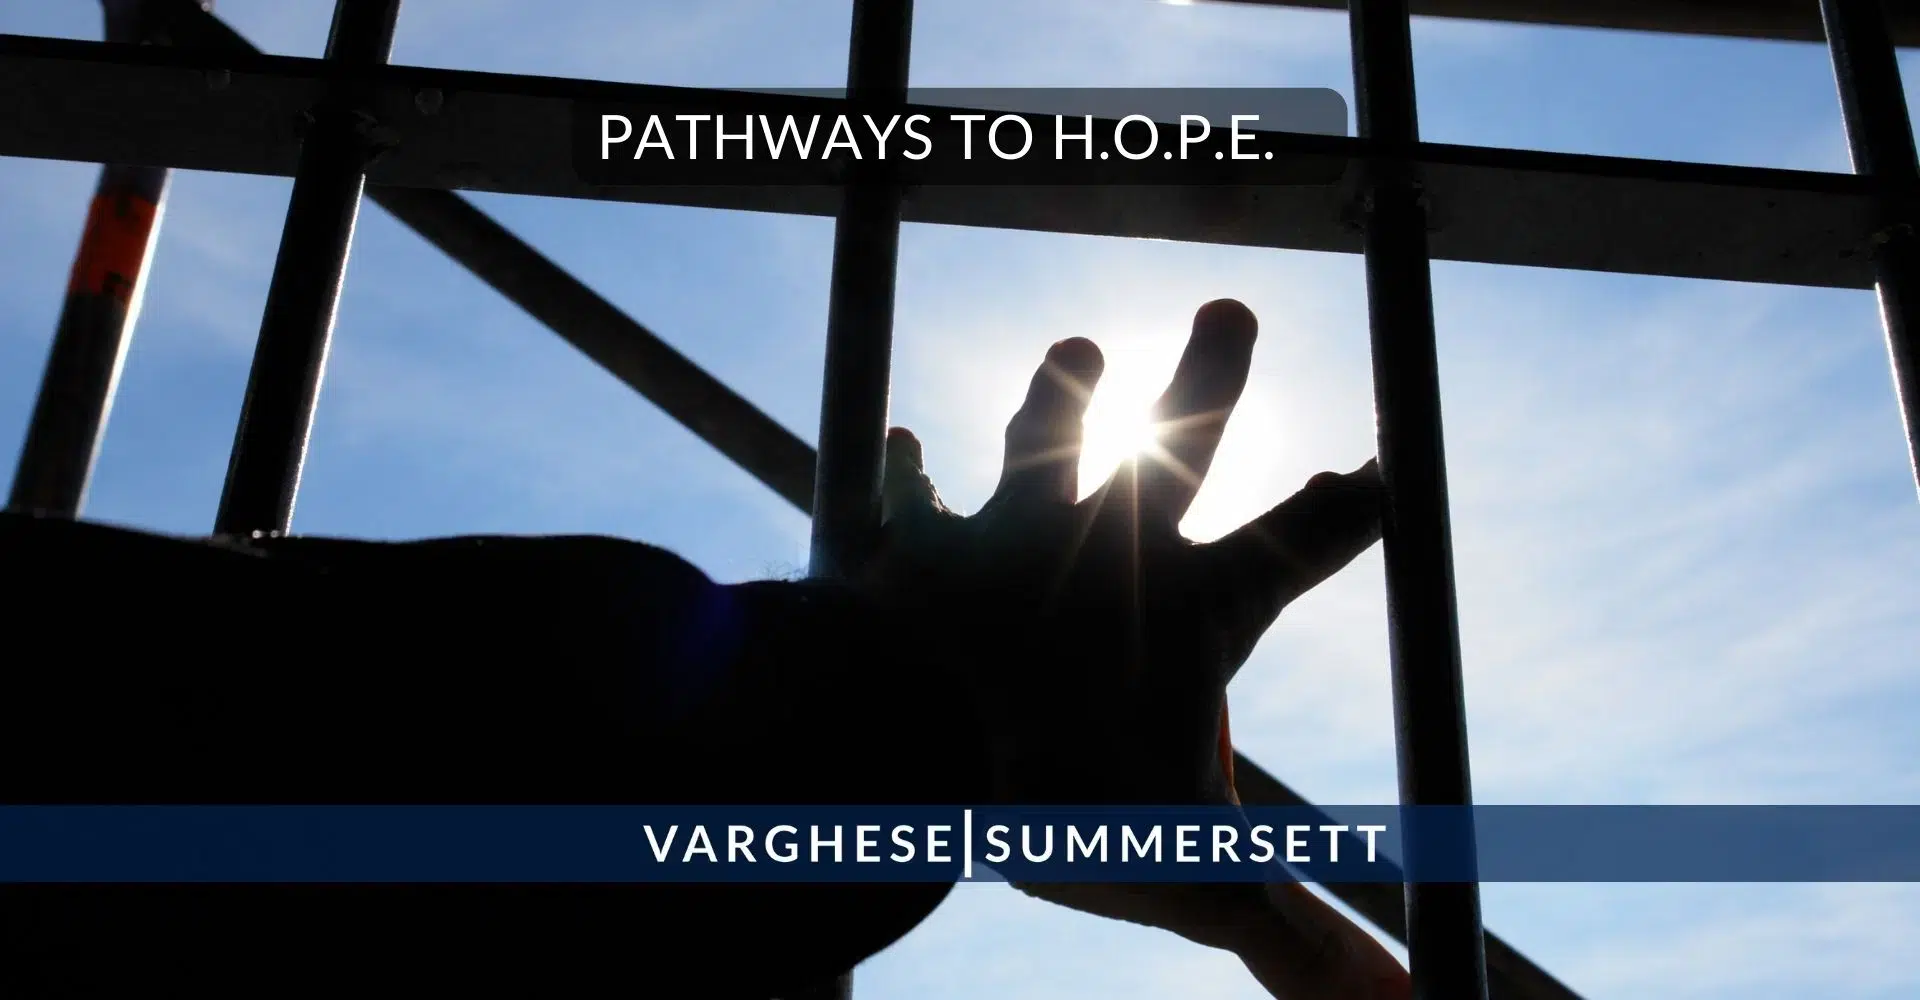 Pathways to Hope